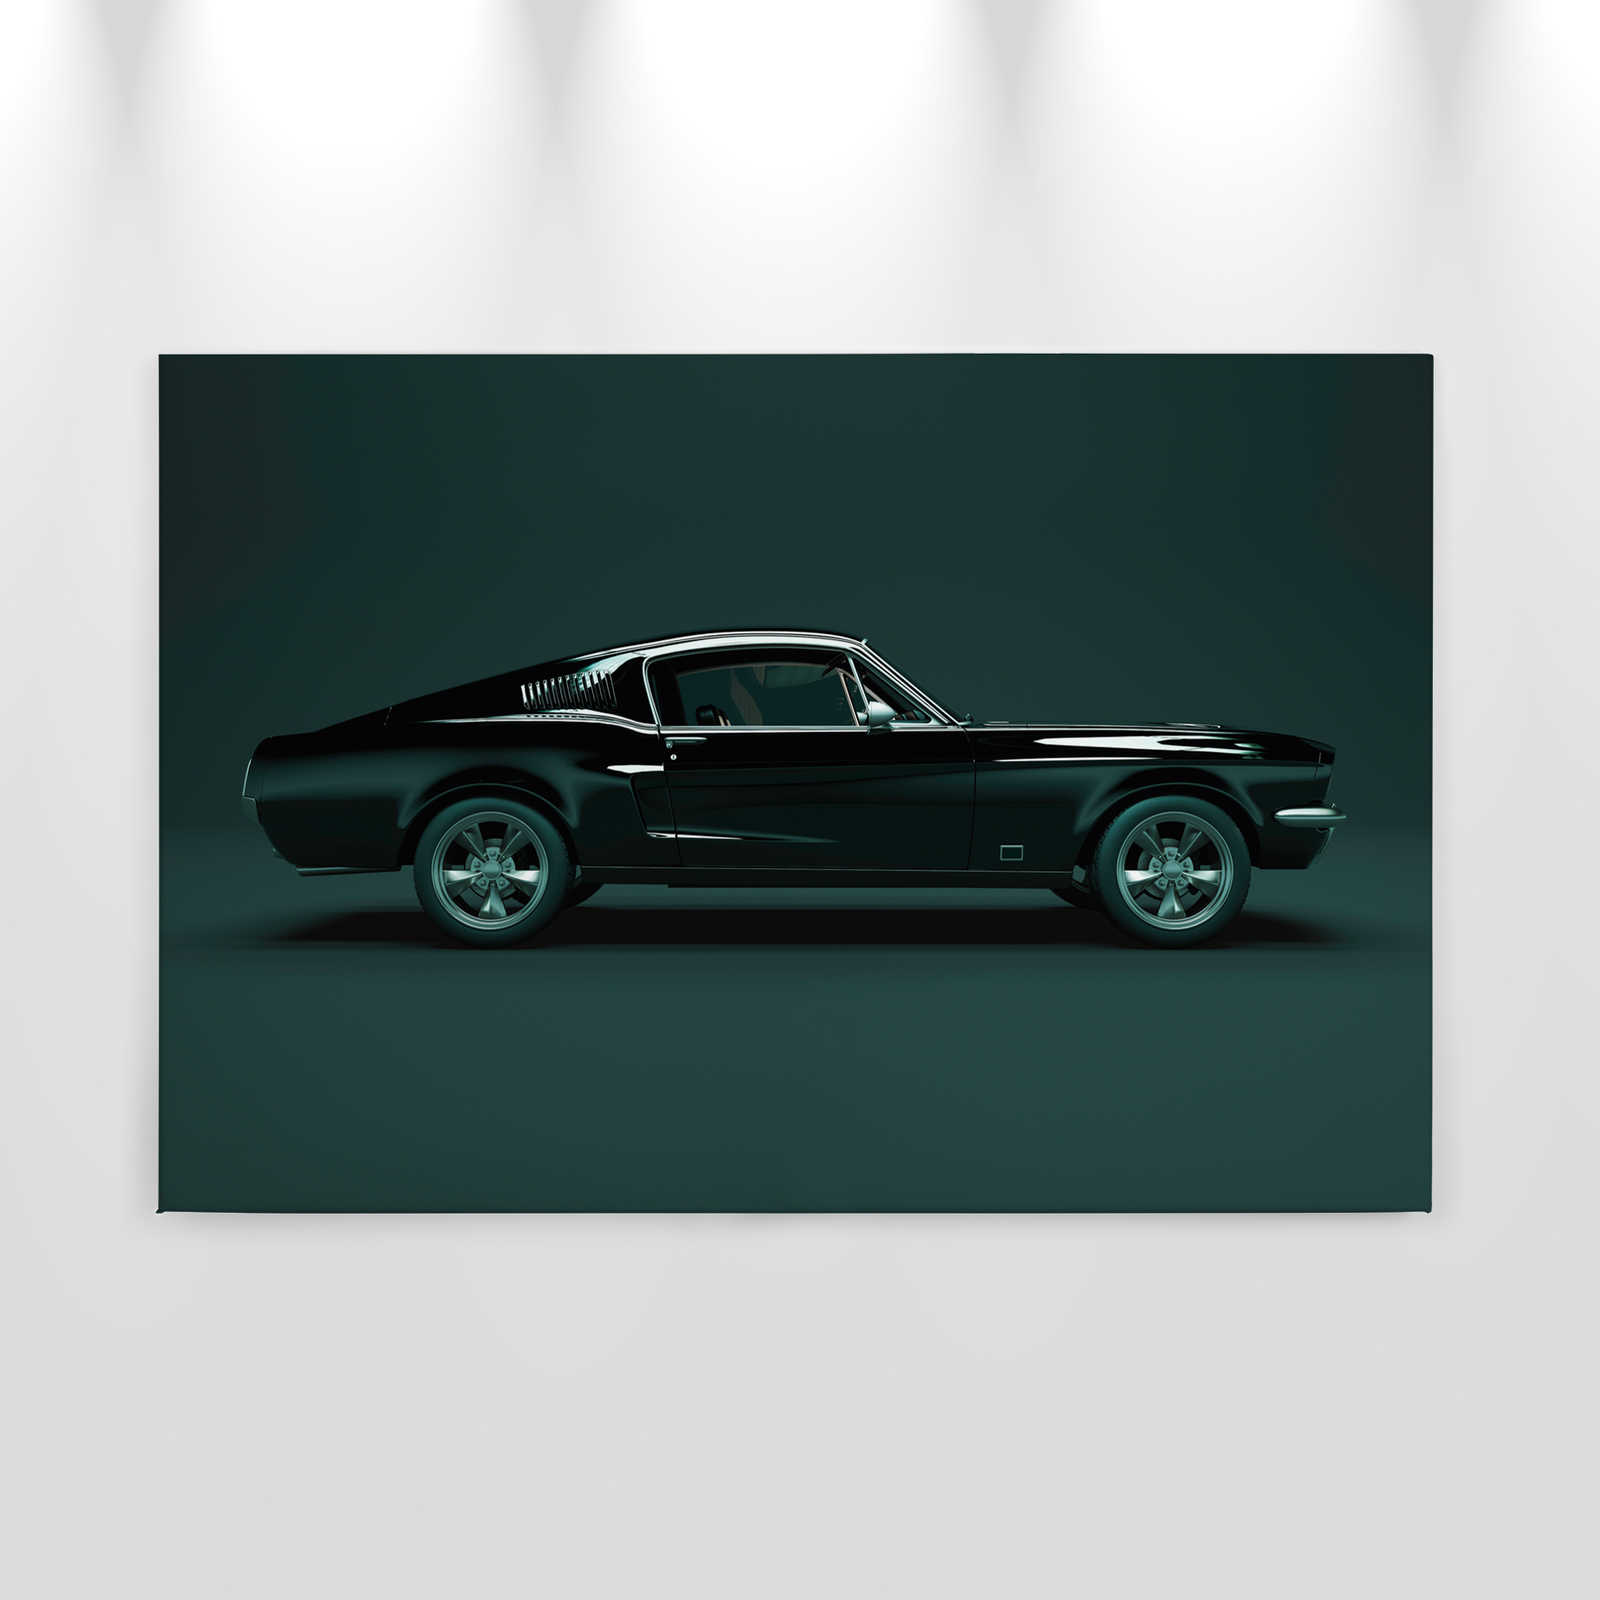             Mustang 1 - Leinwandbild, Seitenansicht Mustang, Vintage – 0,90 m x 0,60 m
        